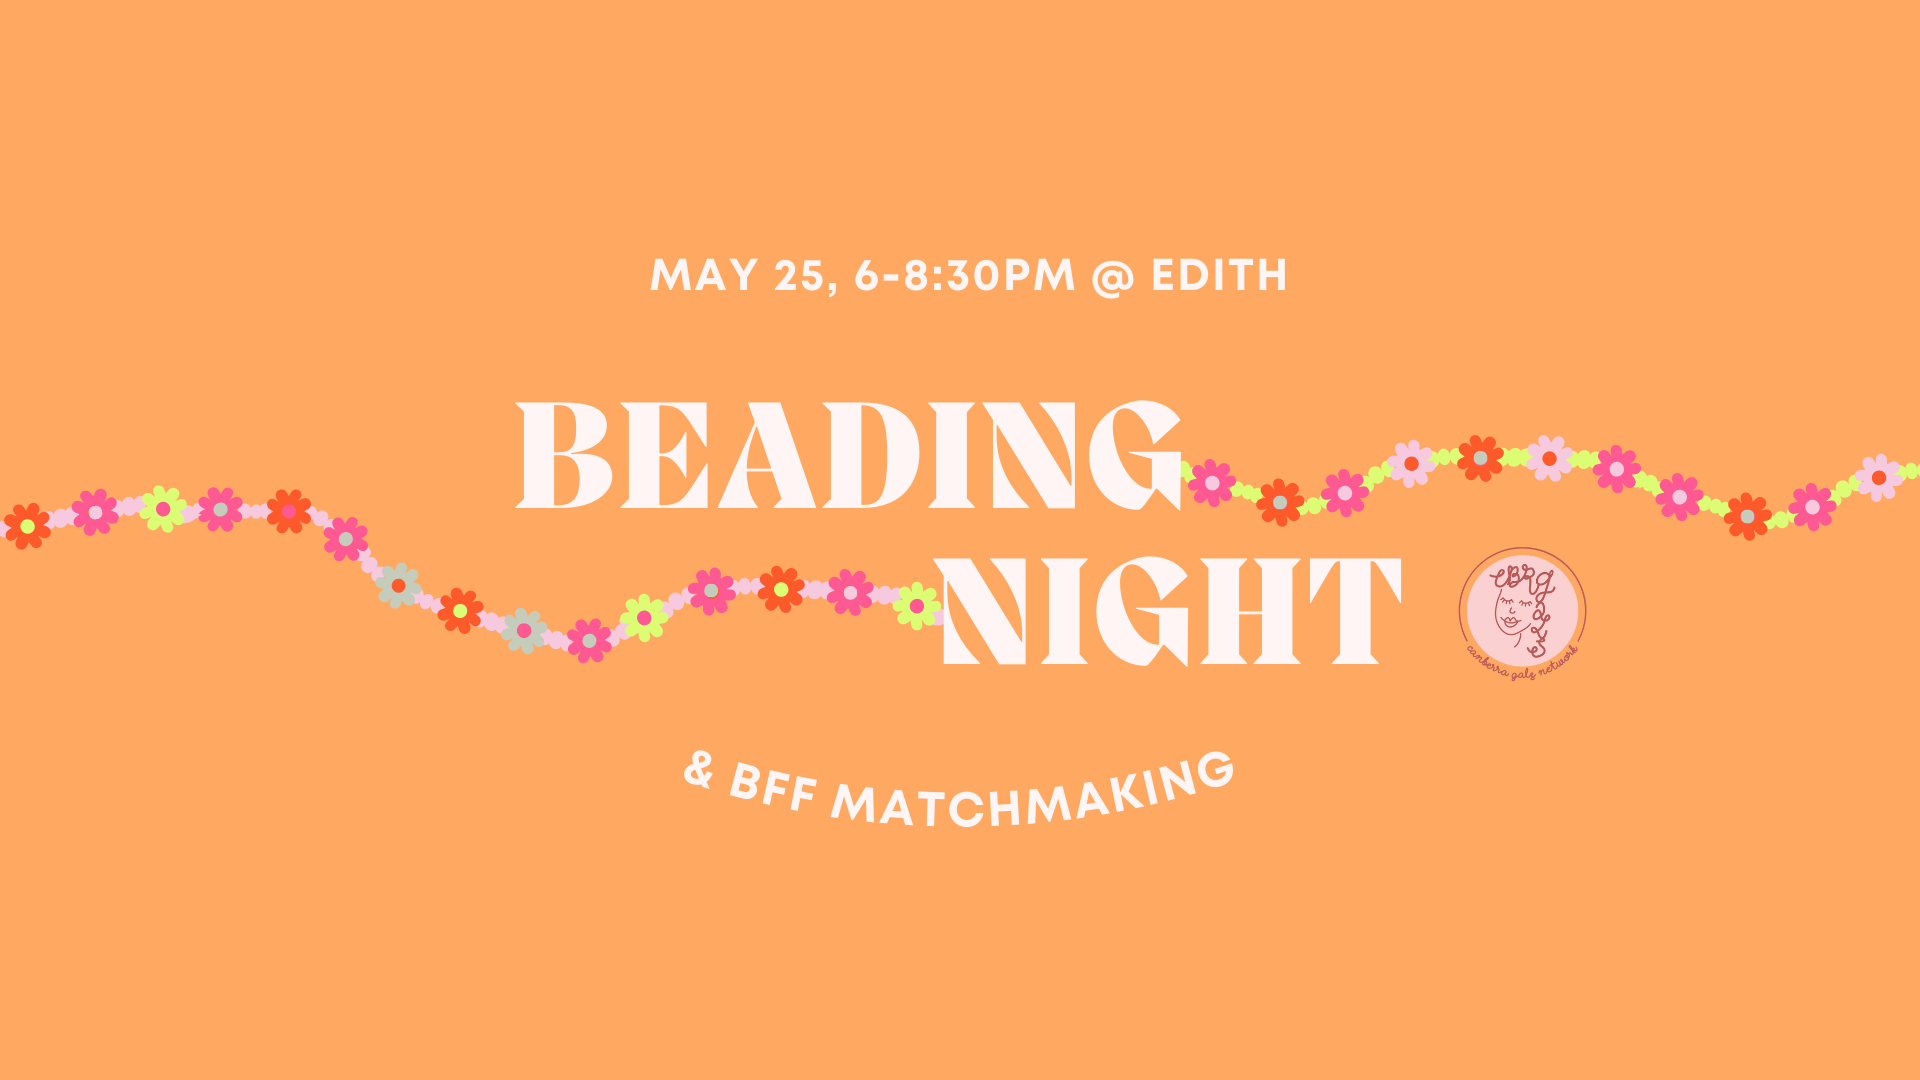 Beading Night & BFF Matchmaking